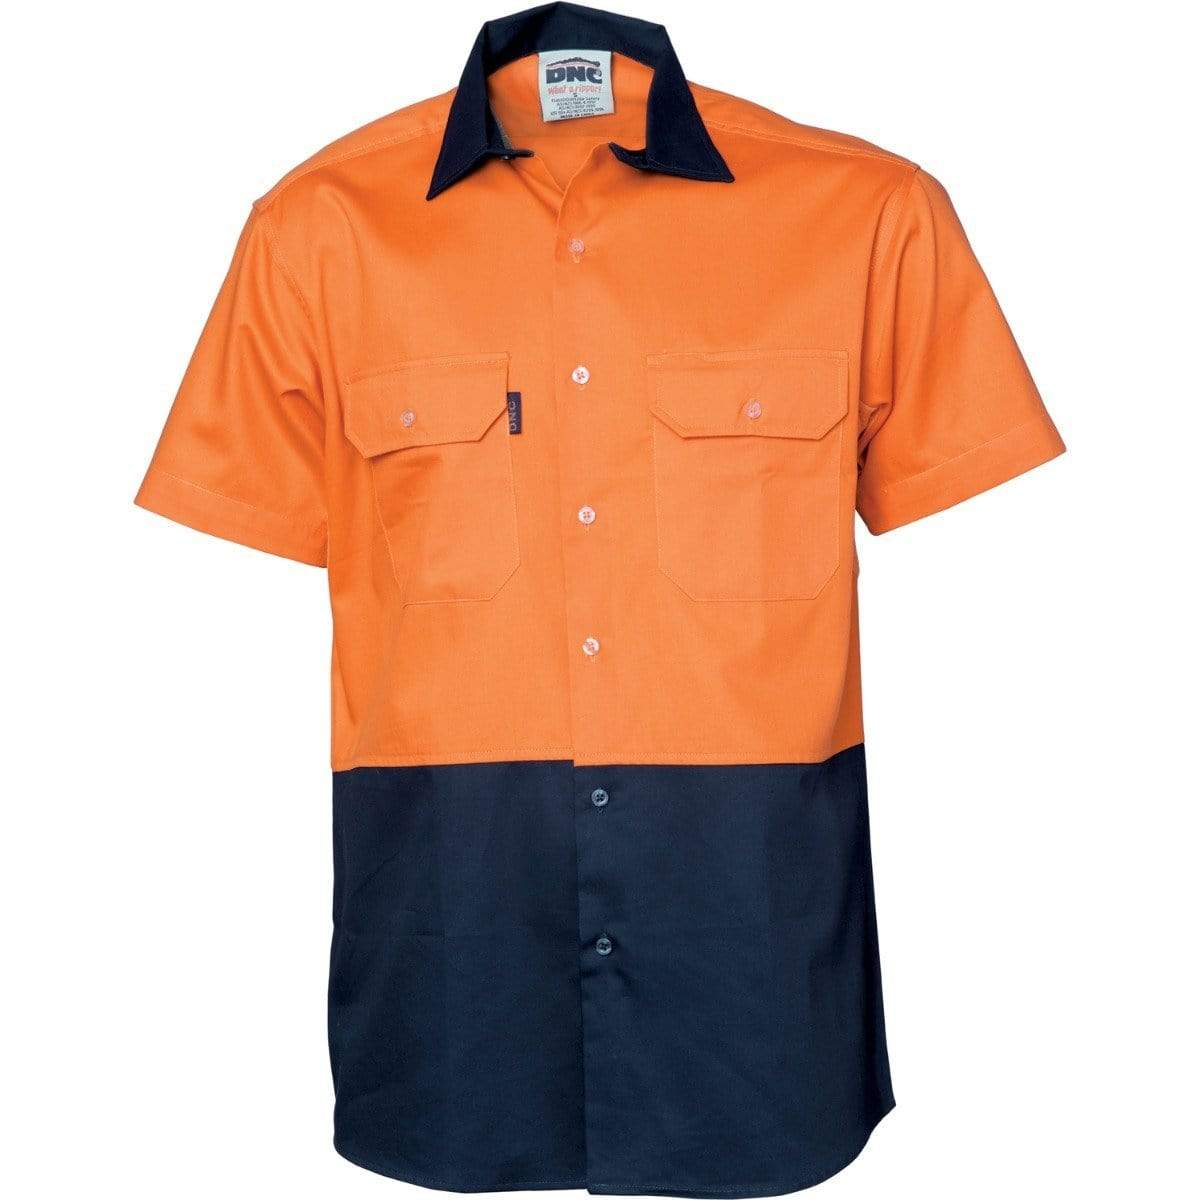 Dnc Workwear Hi-vis Two-tone Cotton Drill Short Sleeve Shirt - 3831 Work Wear DNC Workwear Orange/Navy XS 